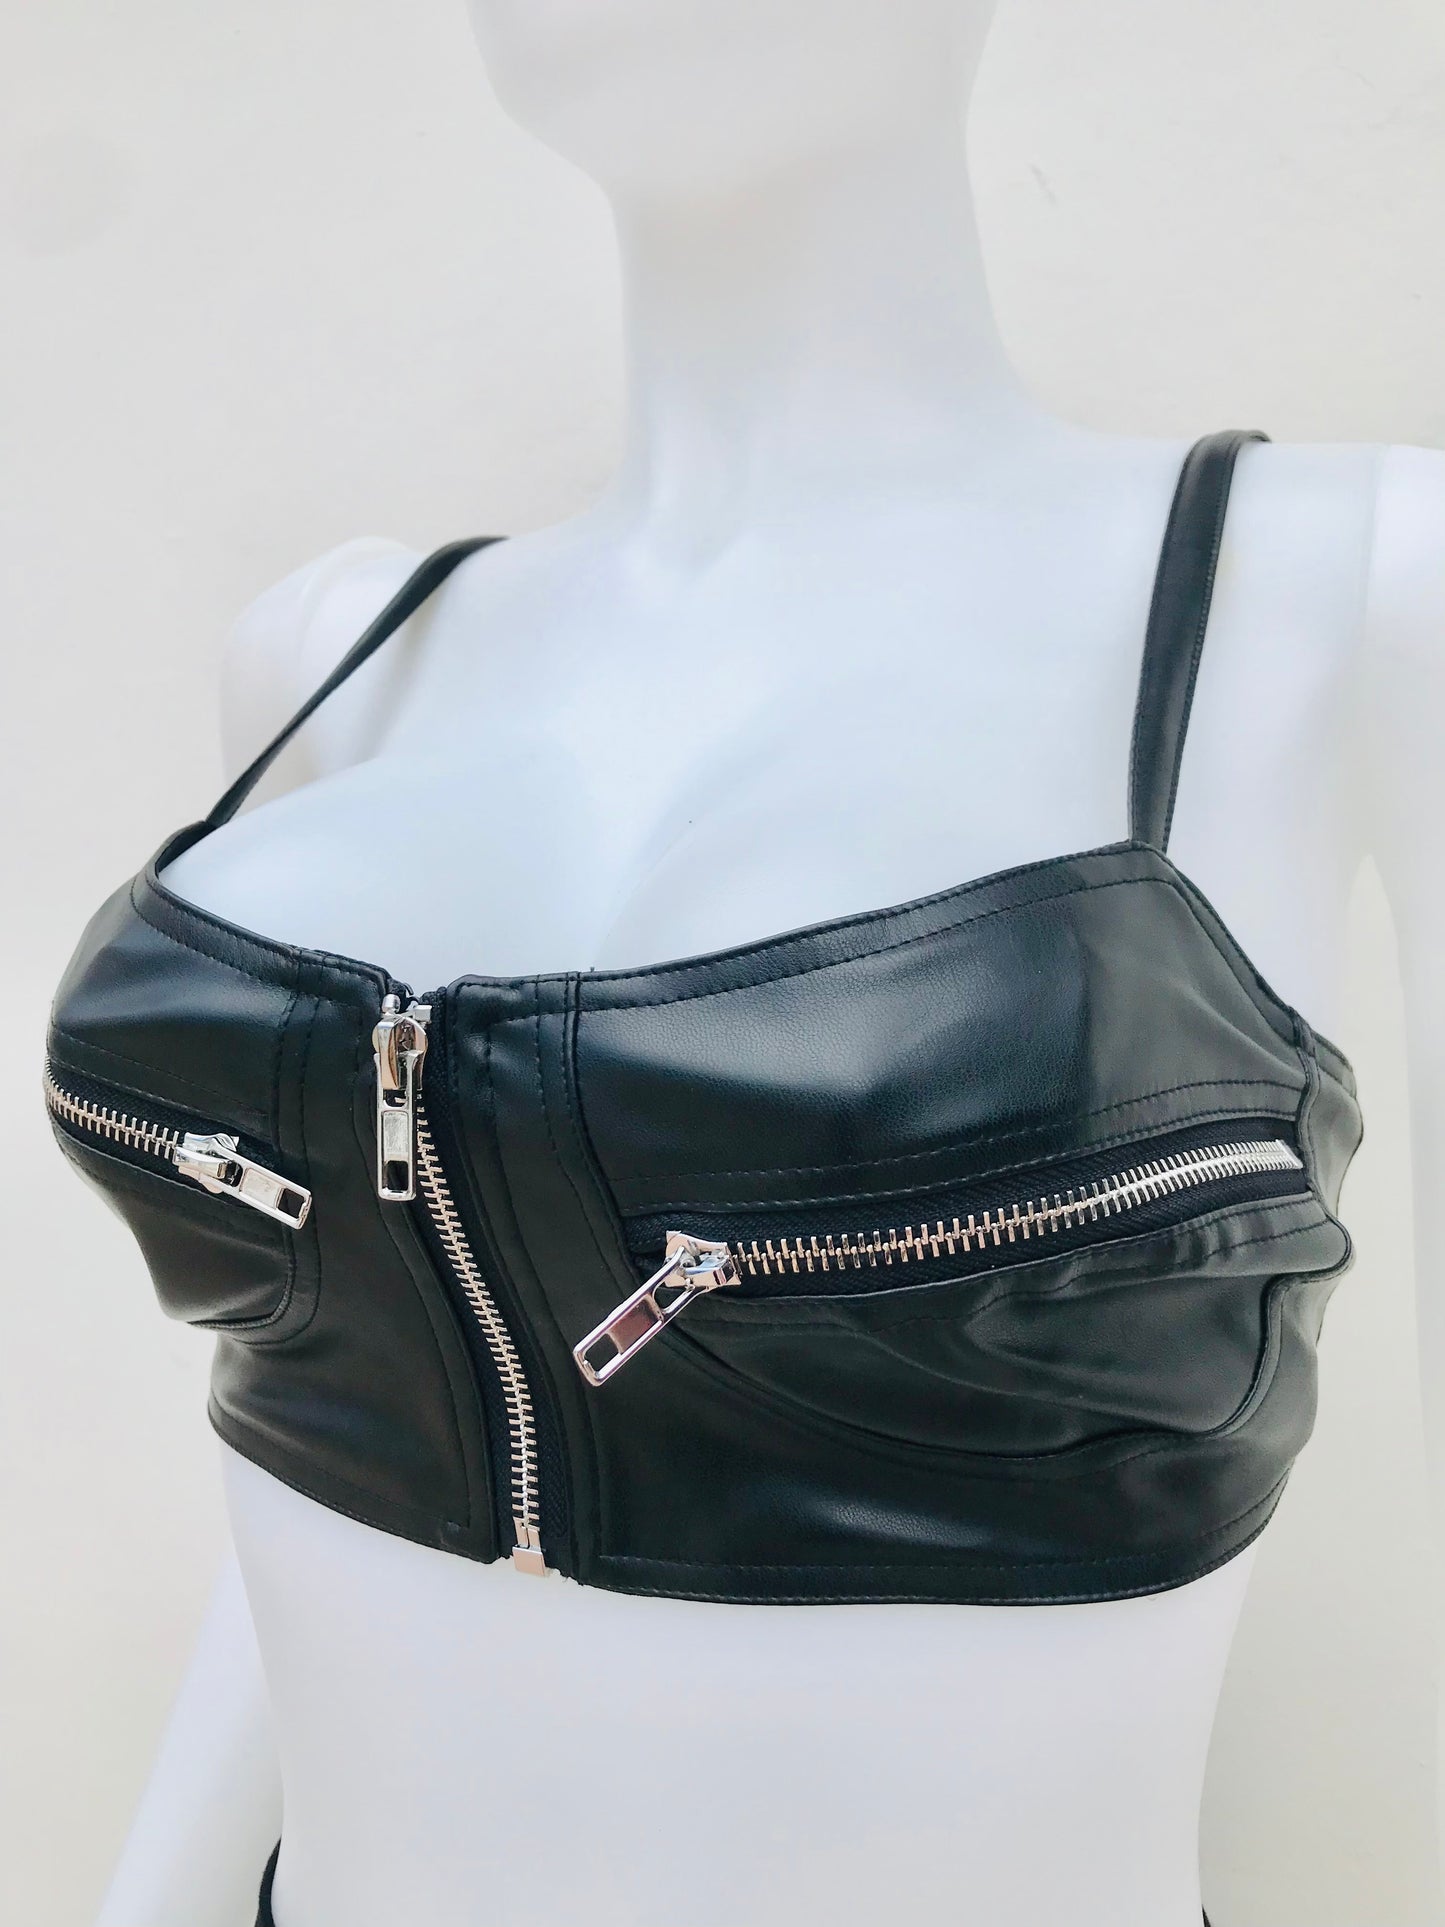 Top FASHION NOVA Original, estilo bra negro en leather con zippers plateados.